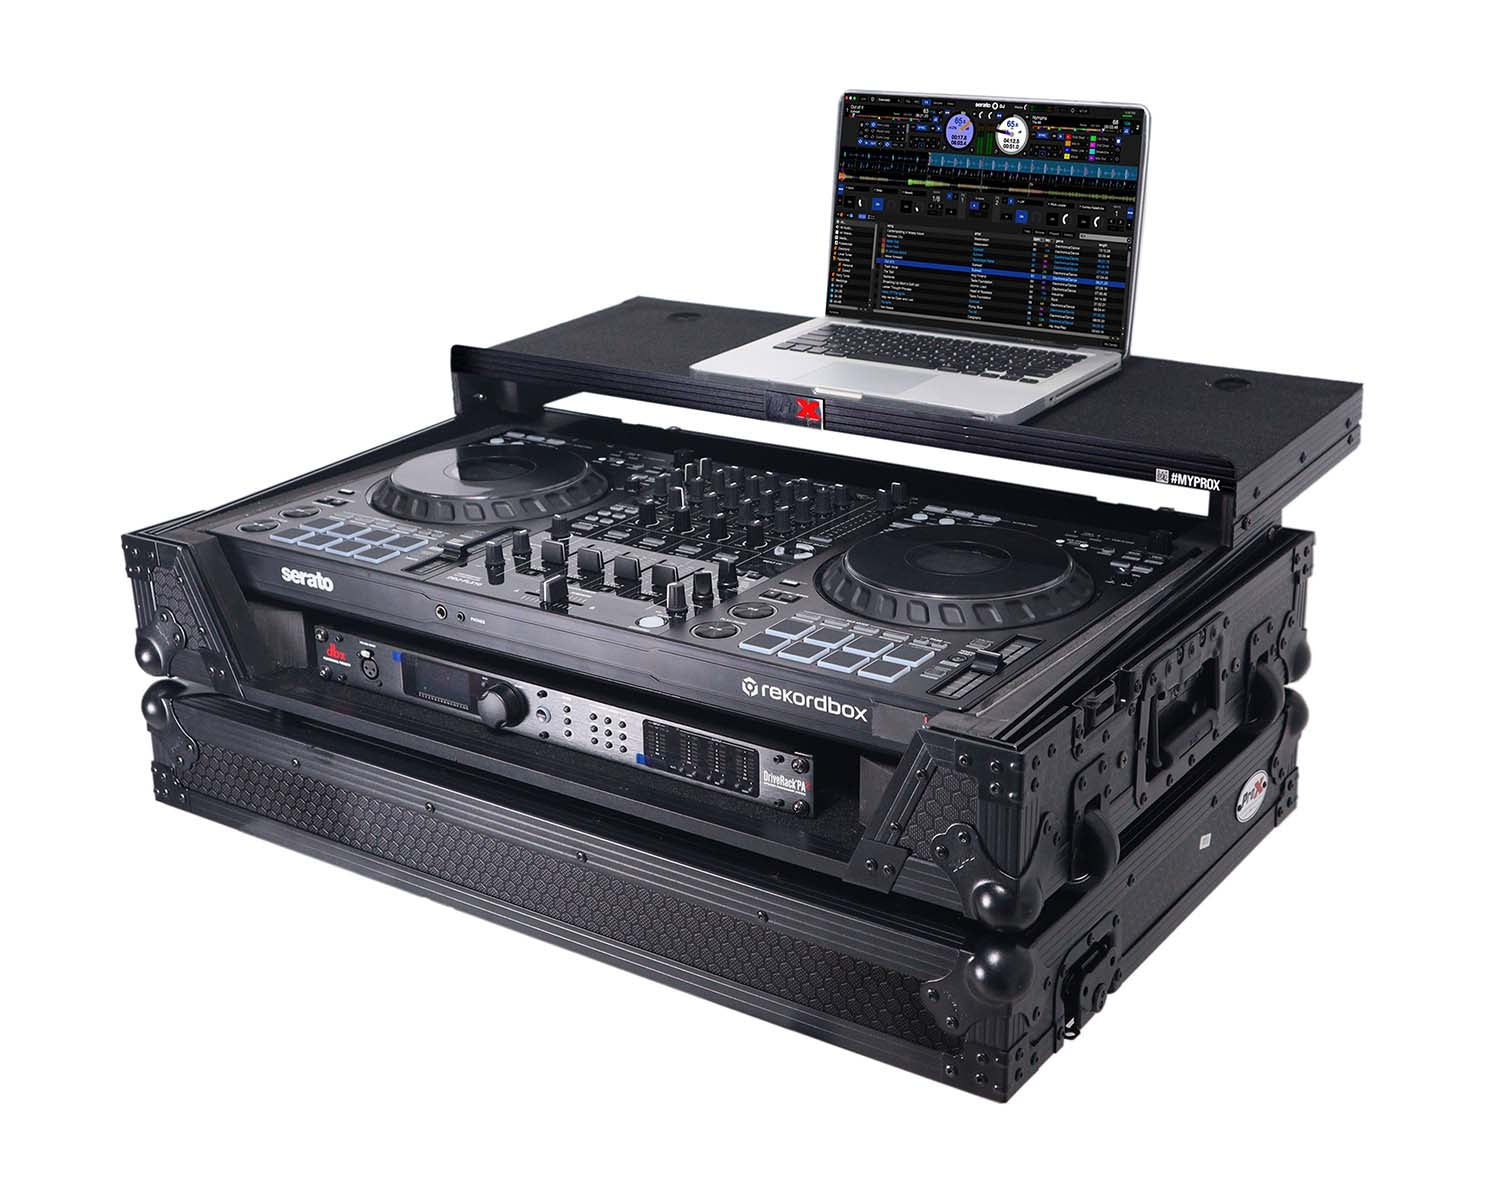 72 W x 46 H All-Black Pro DJ Facade - Odyssey Cases